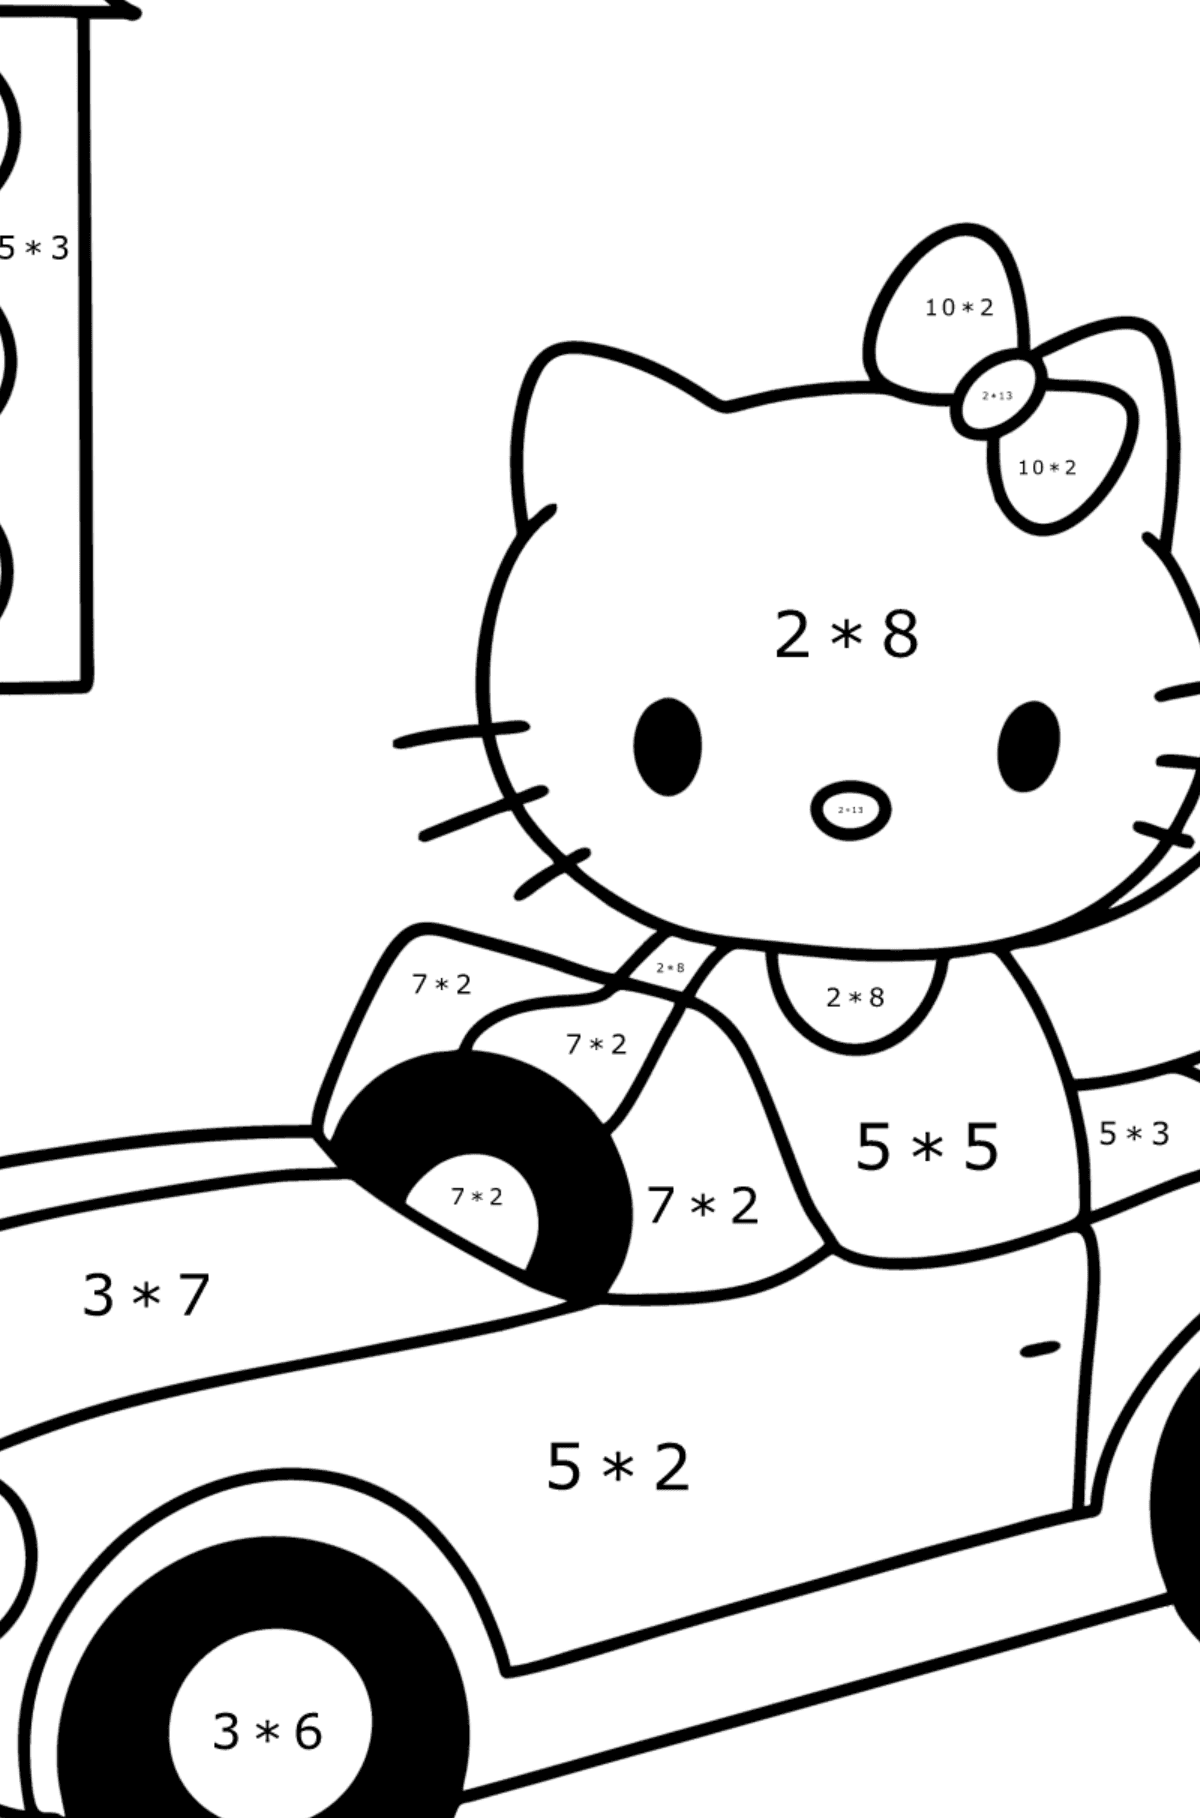 Ausmalbild Hello Kitty mit dem Auto - Mathe Ausmalbilder - Multiplikation für Kinder